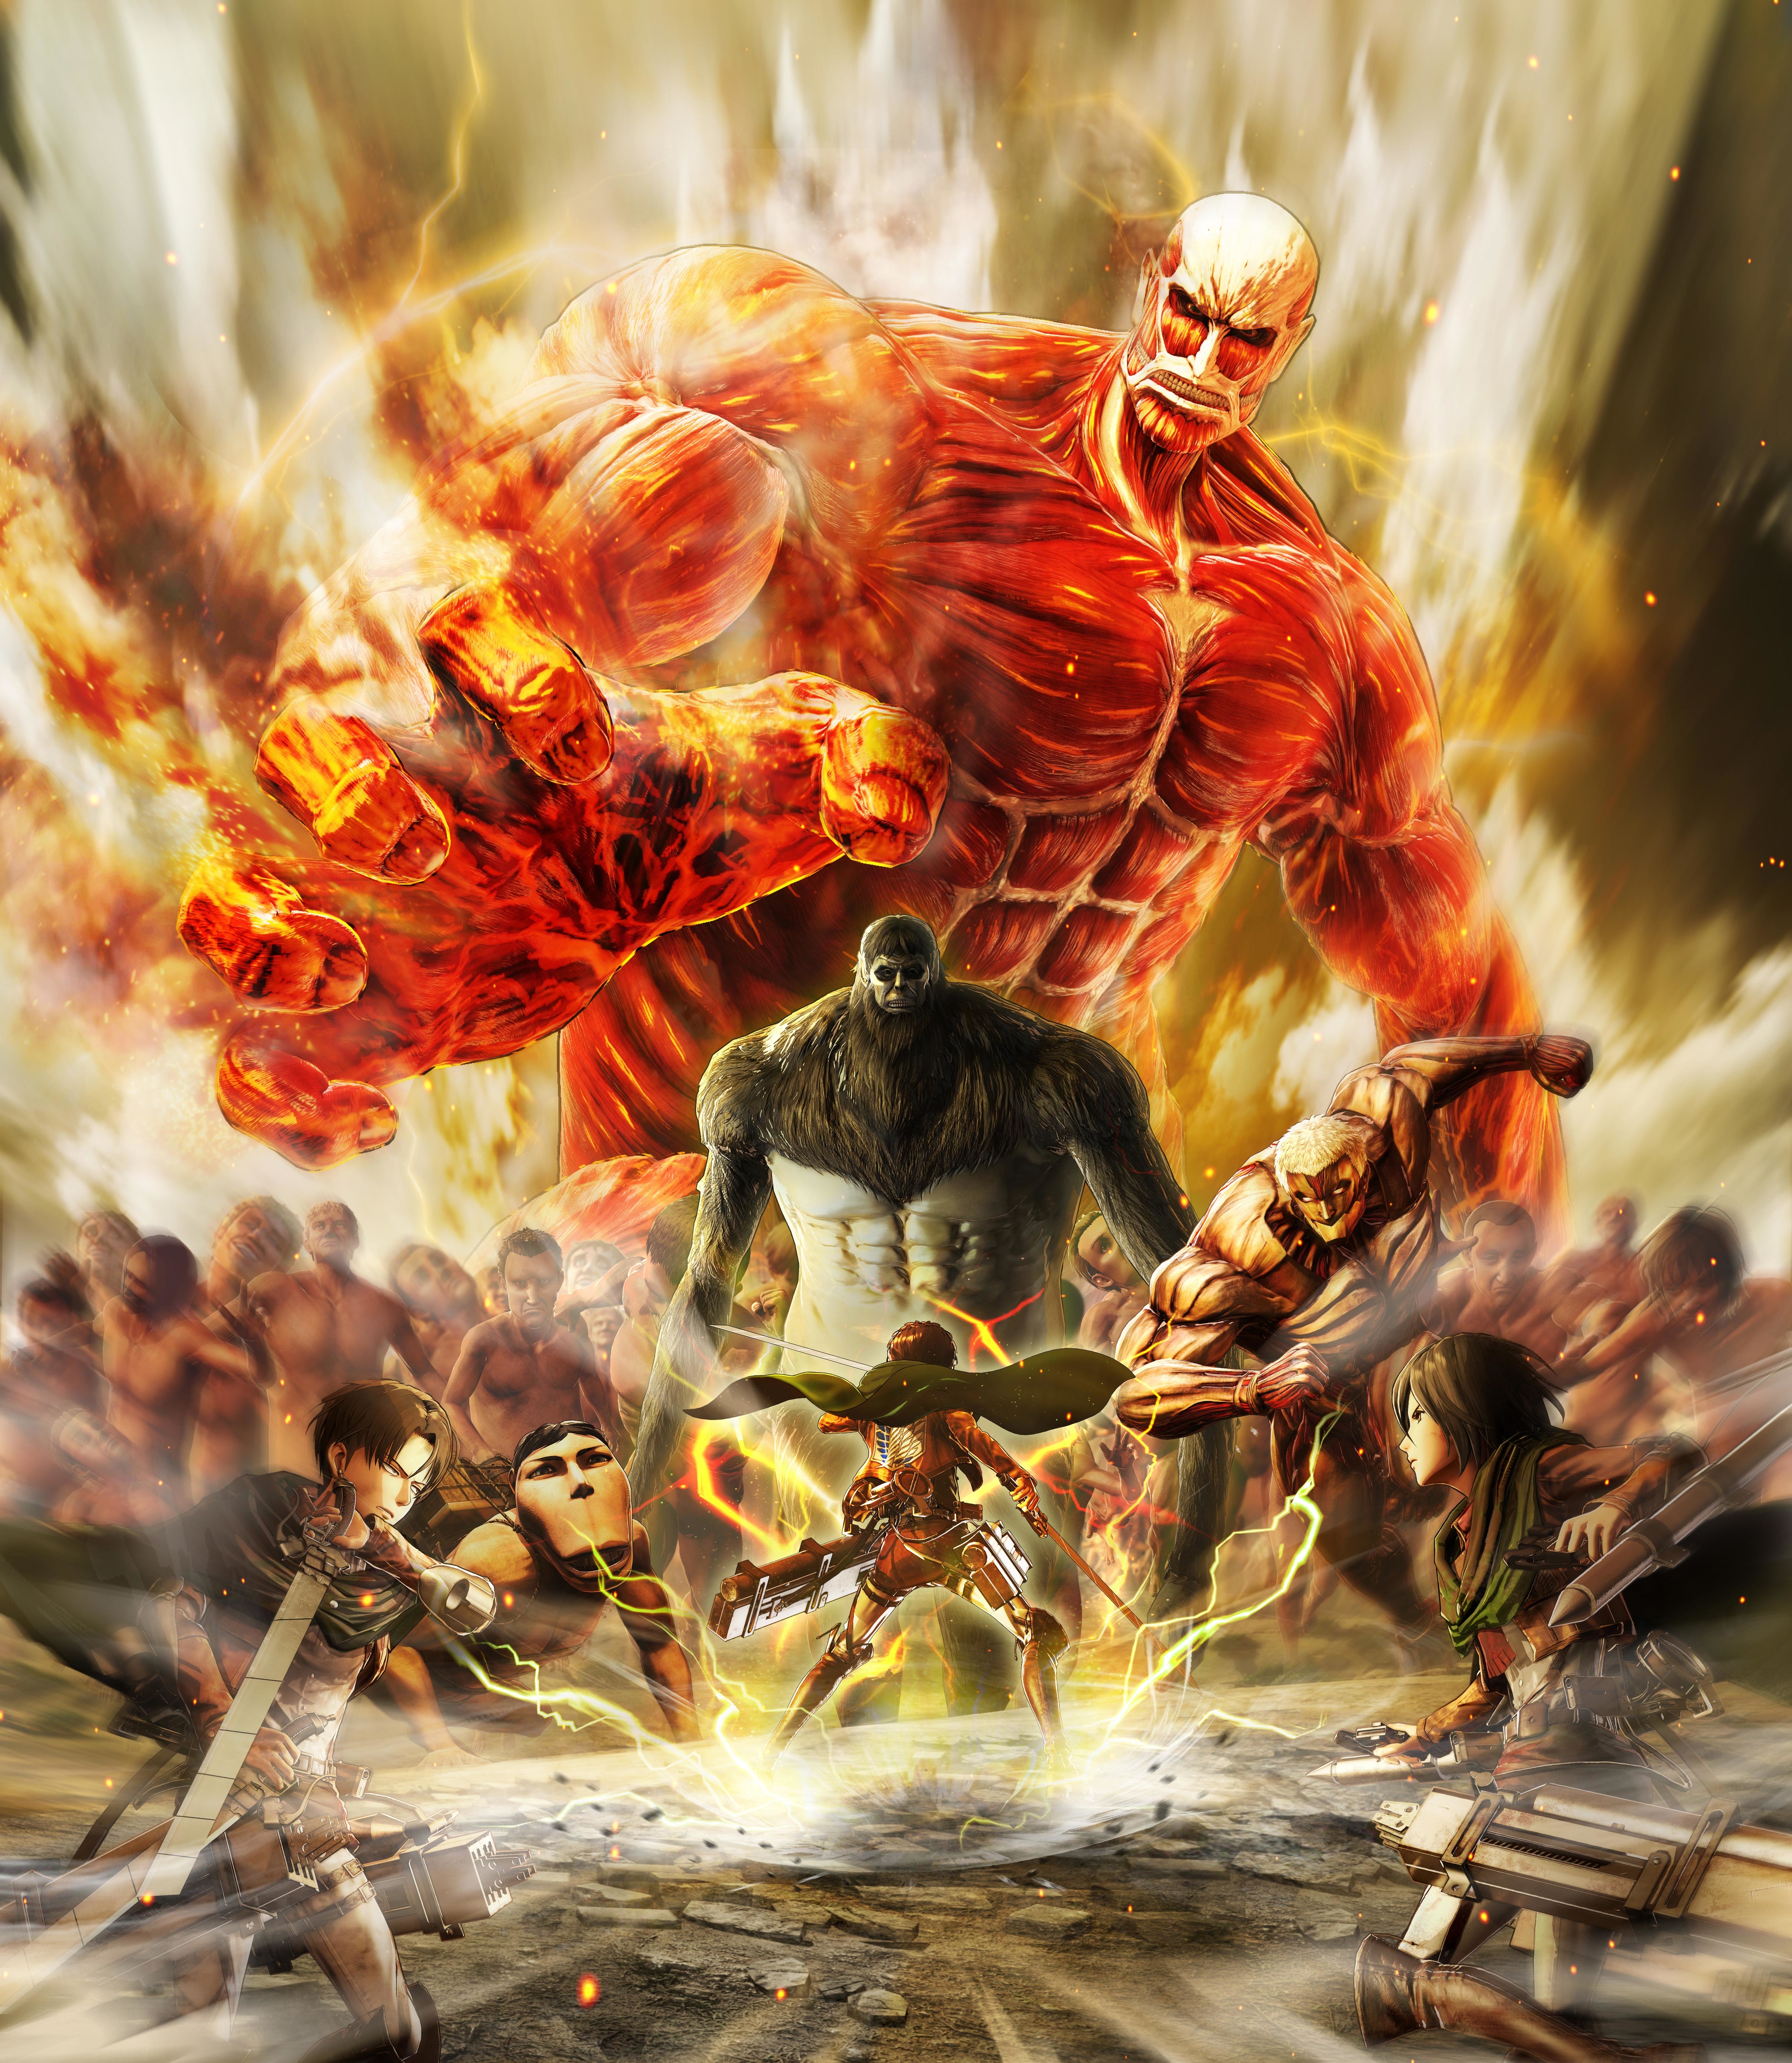 Attack on Titan Final Battle Wallpaper, HD Games 4K Wallpapers, Images